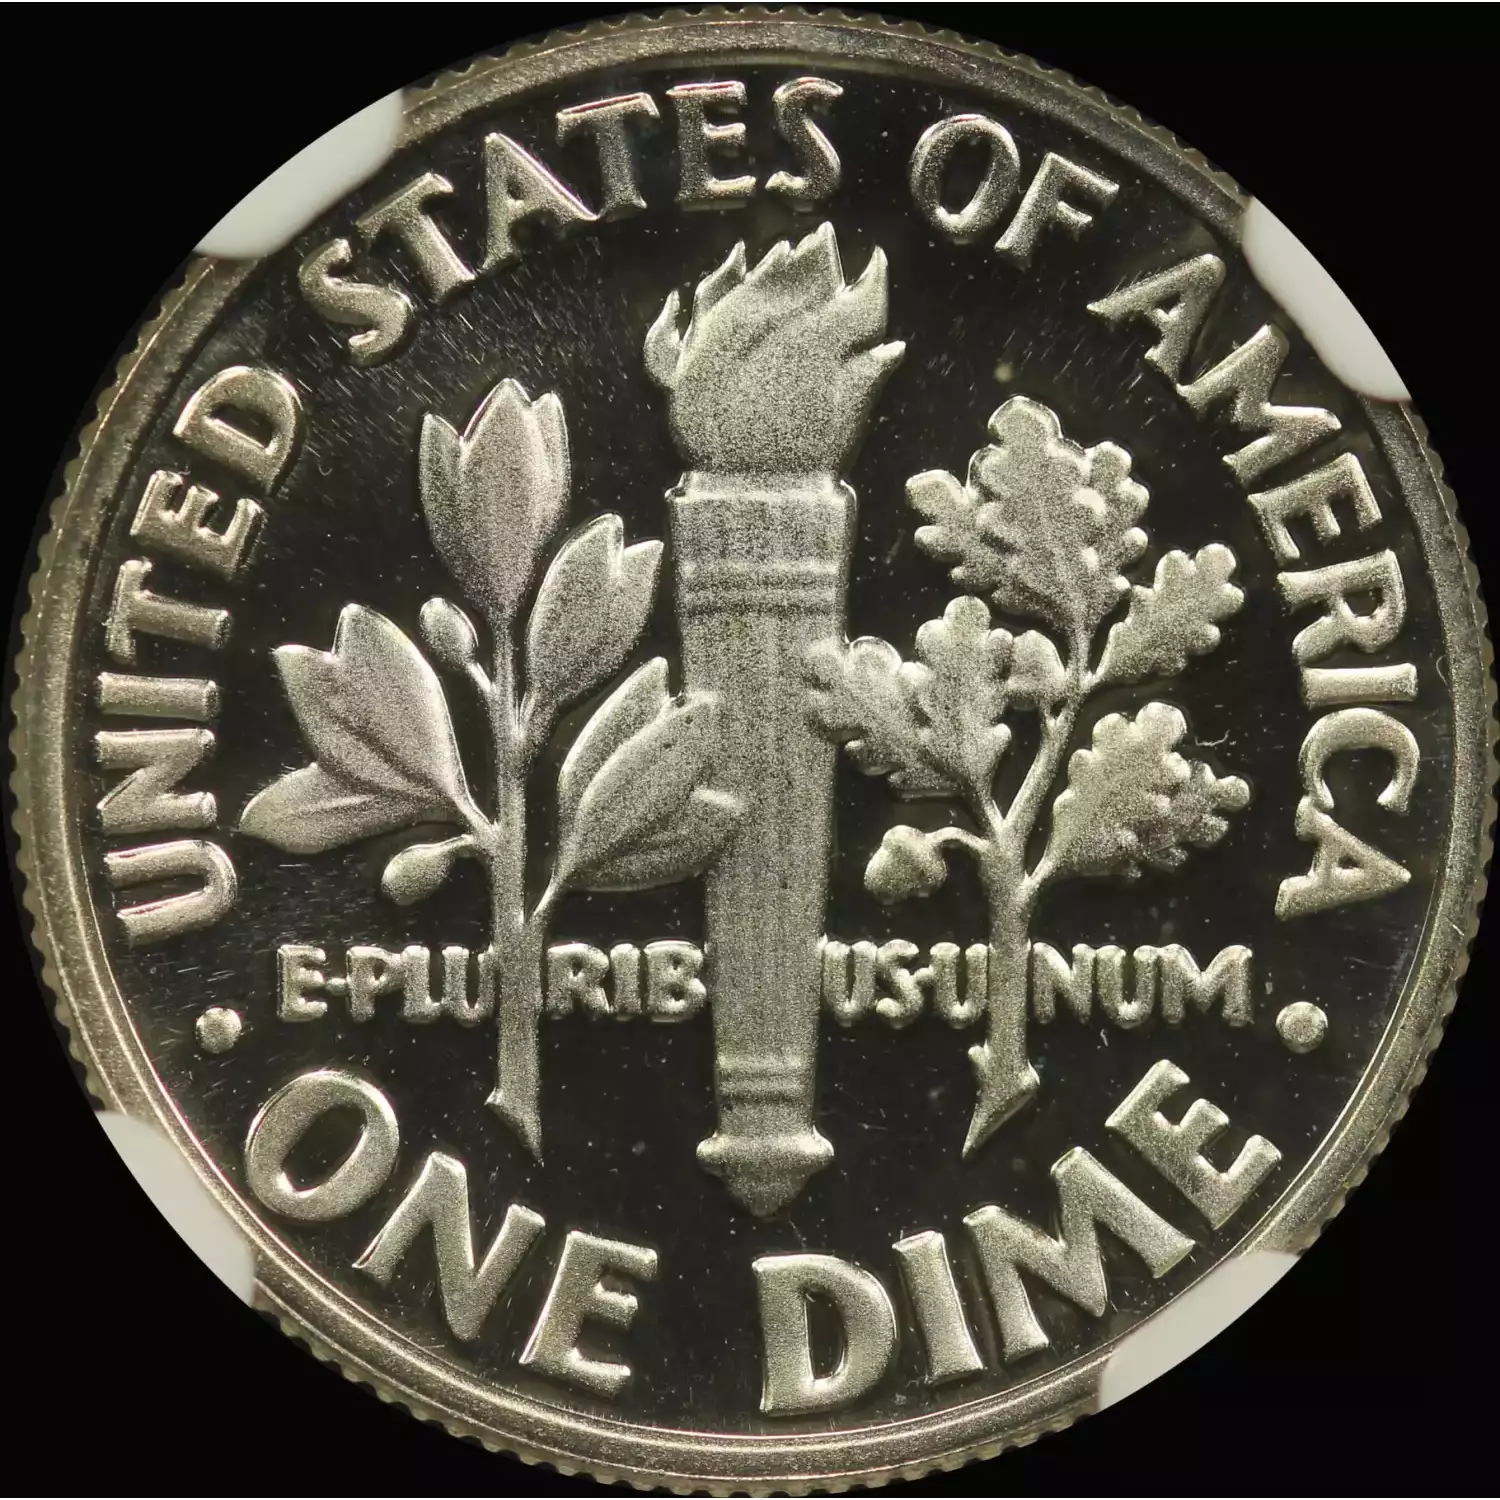 Dimes---Roosevelt 1965-Present-Copper-Nickel- 1 Dime (2)